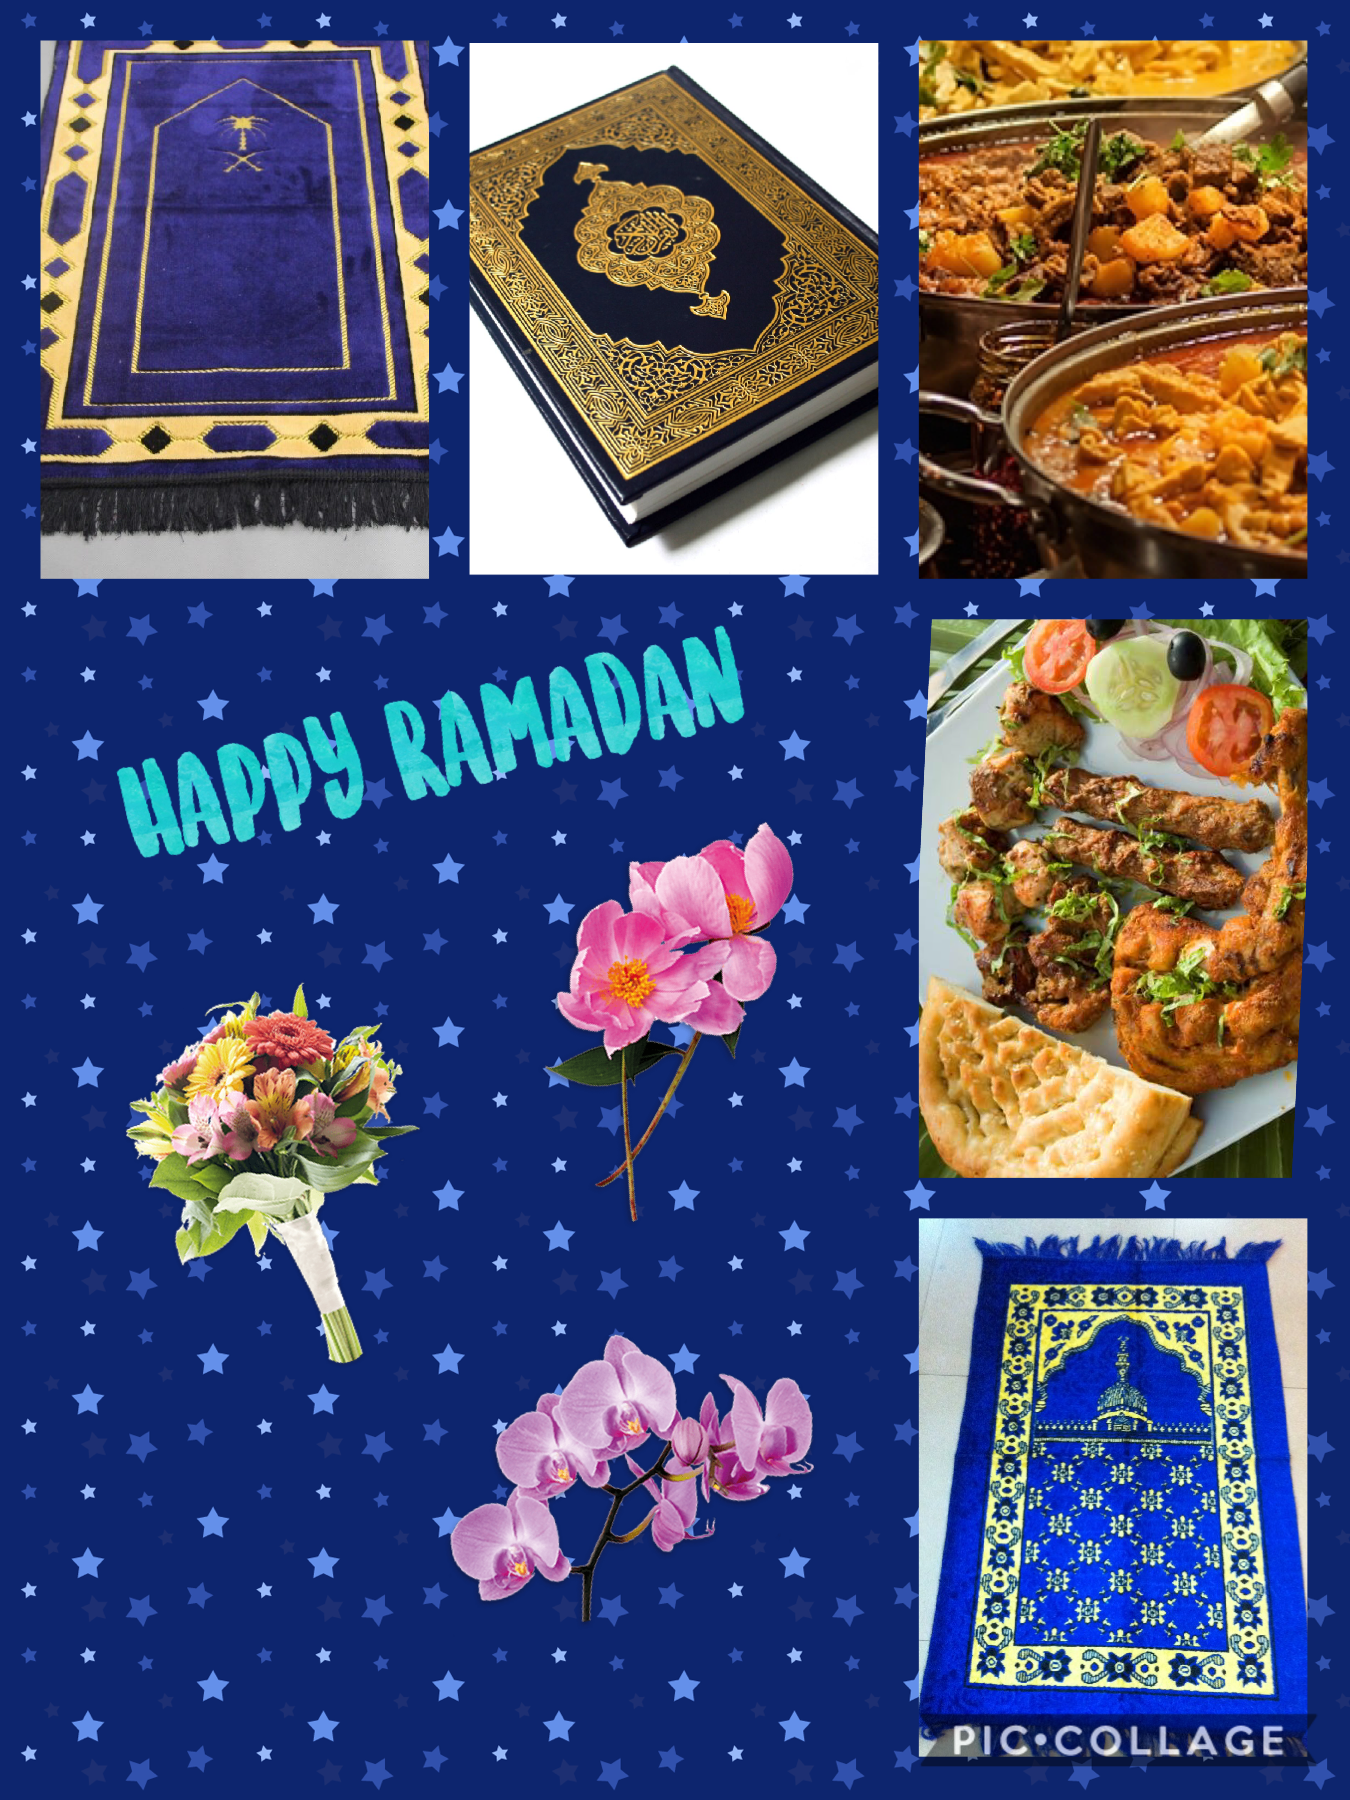 Happy Ramadan to everyone 😻